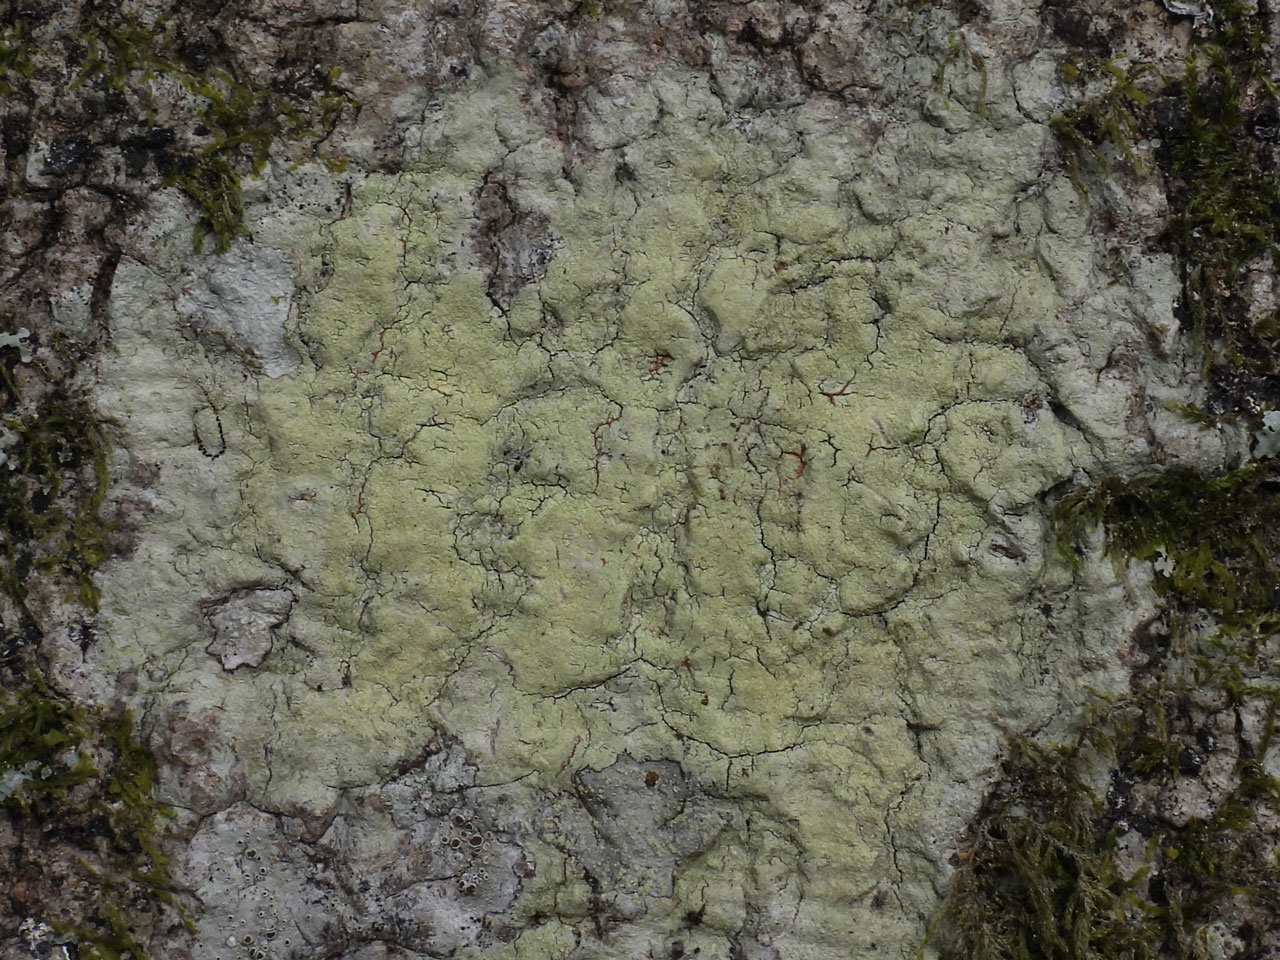 Pertusaria flavida, few isidia, Busketts Wood, New Forest